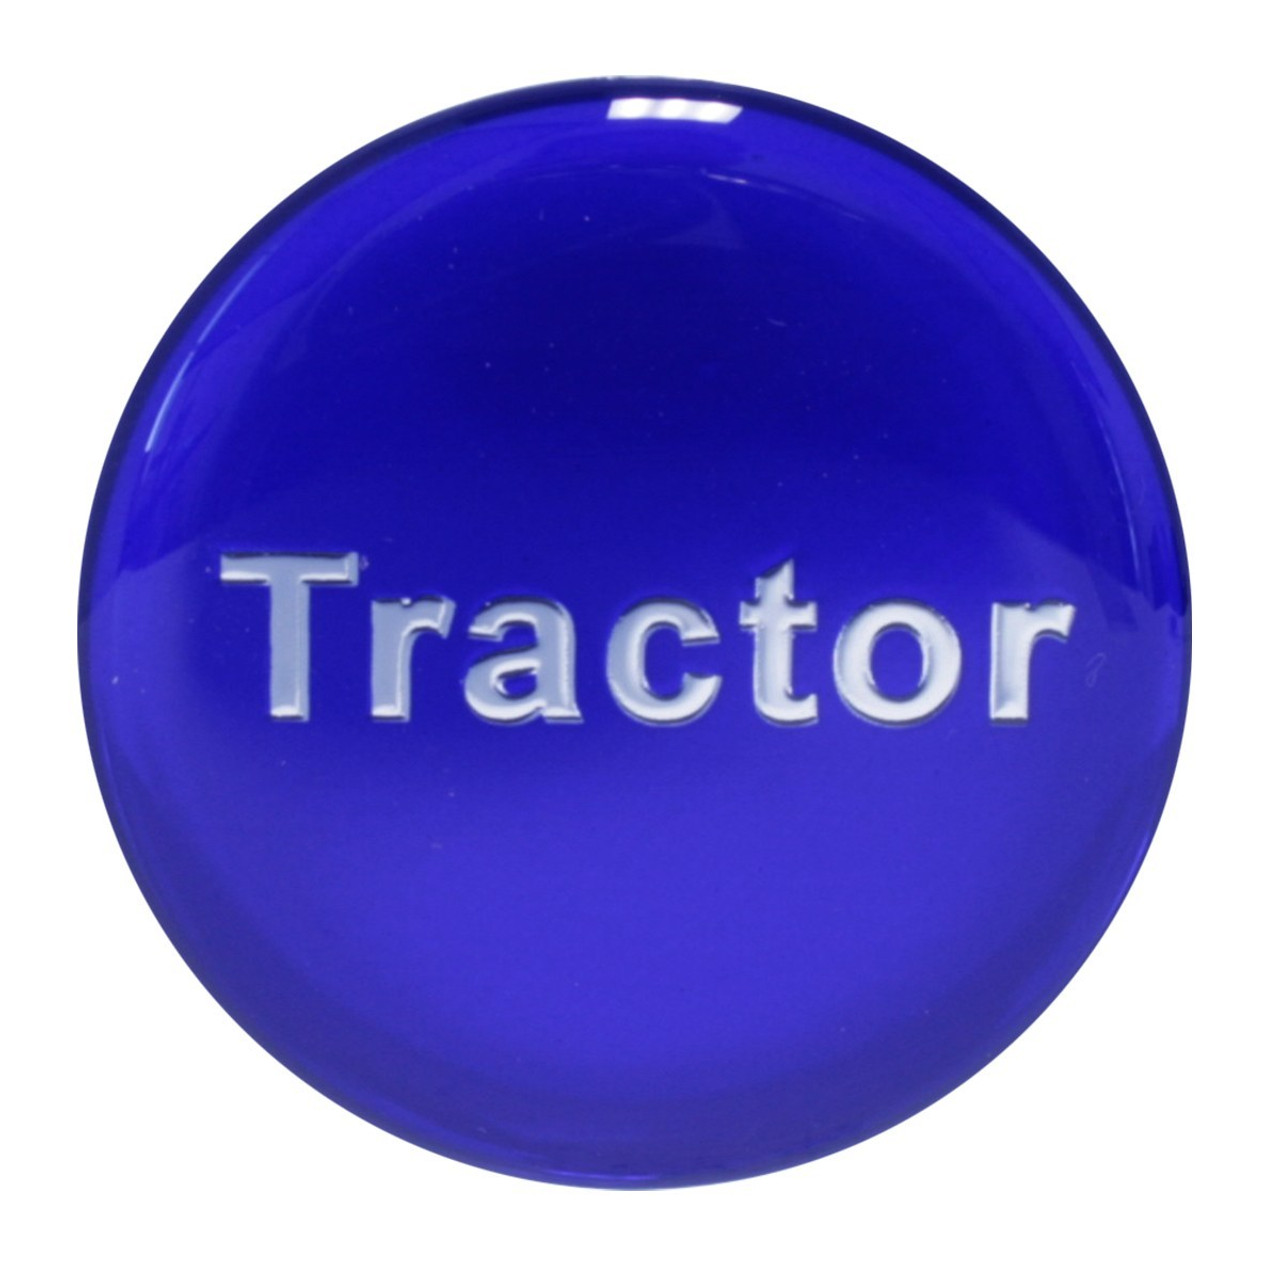 "Tractor" Glossy Brake Knob Sticker Only